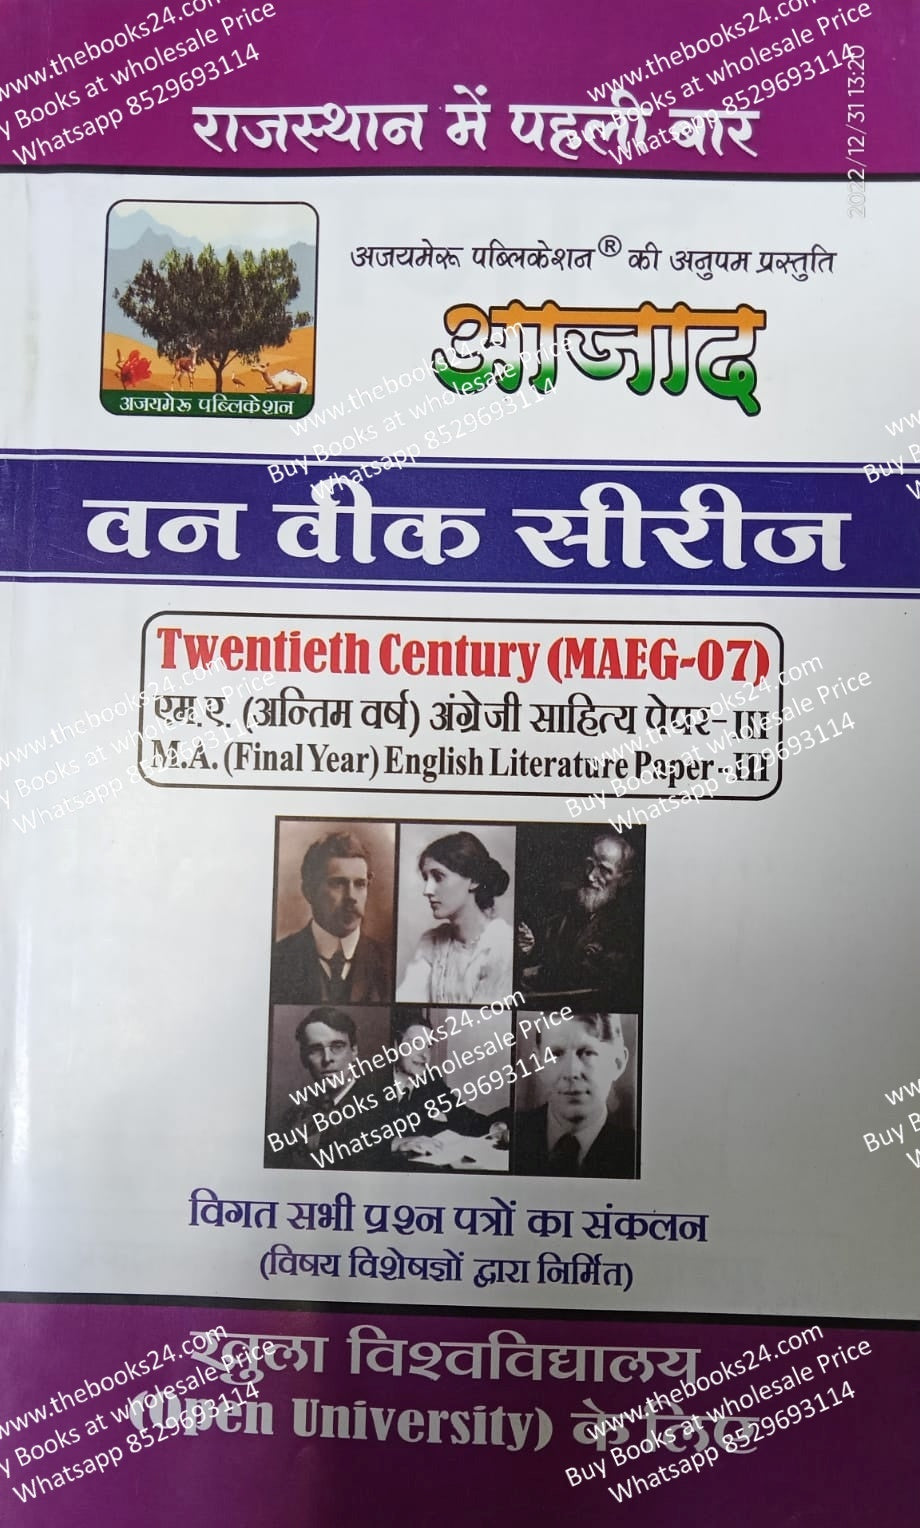 Azad VMOU Kota M.A (Final year) English Literature Paper-III Twentieth Century (MAEG-07)